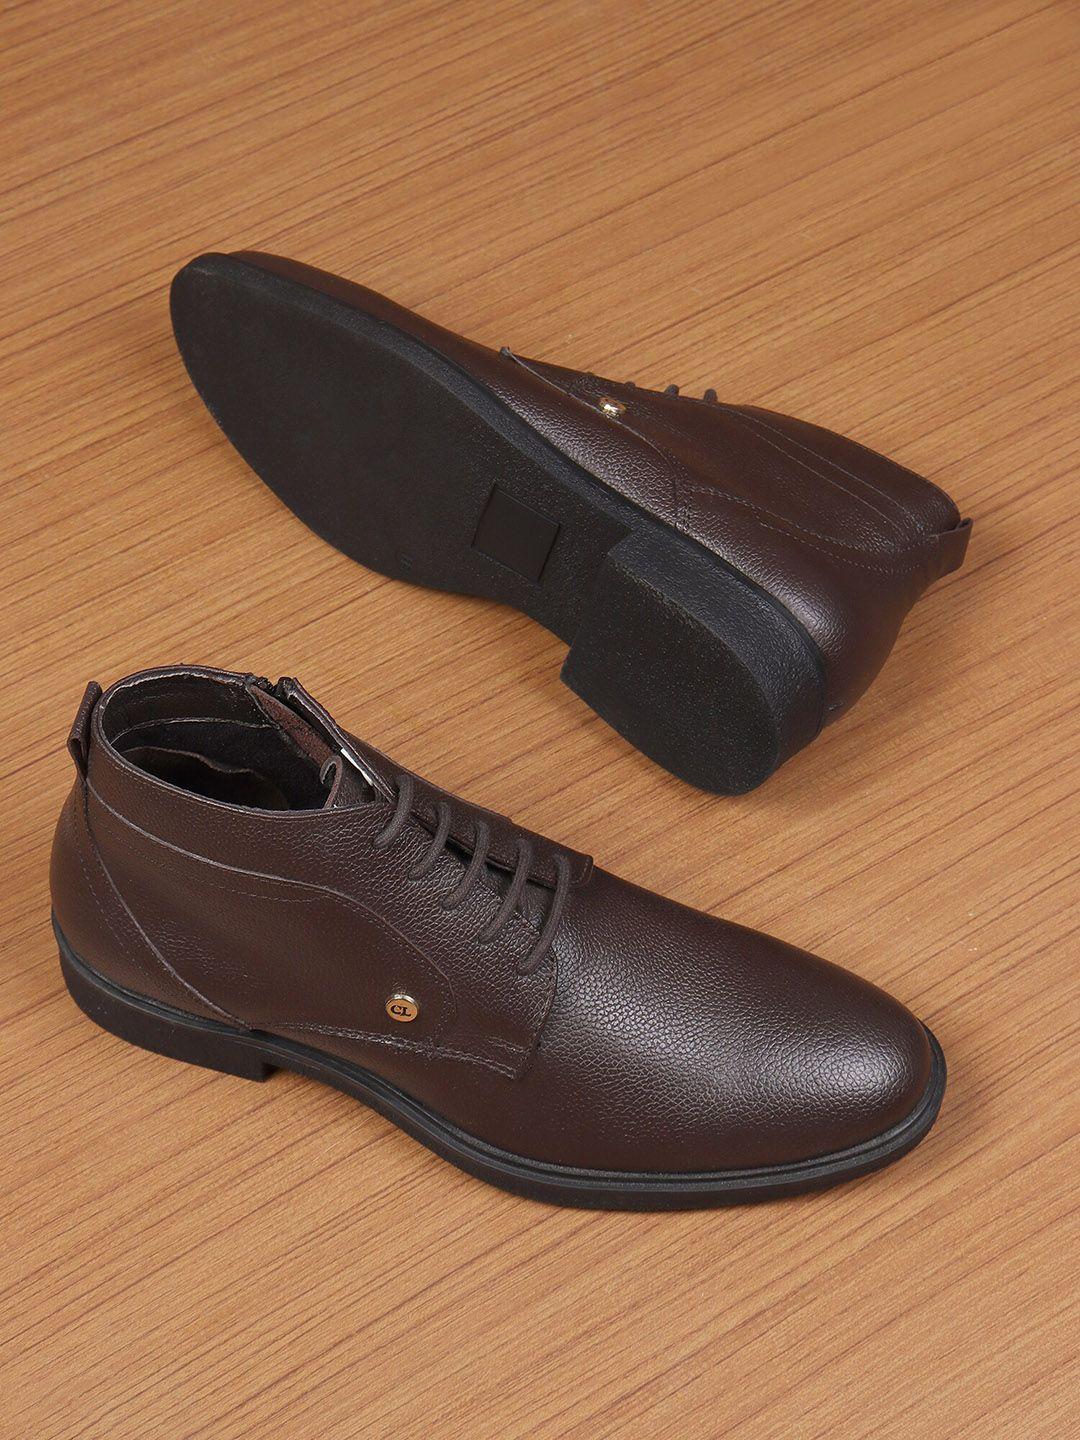 carlton-london-men-brown-leather-formal-shoes